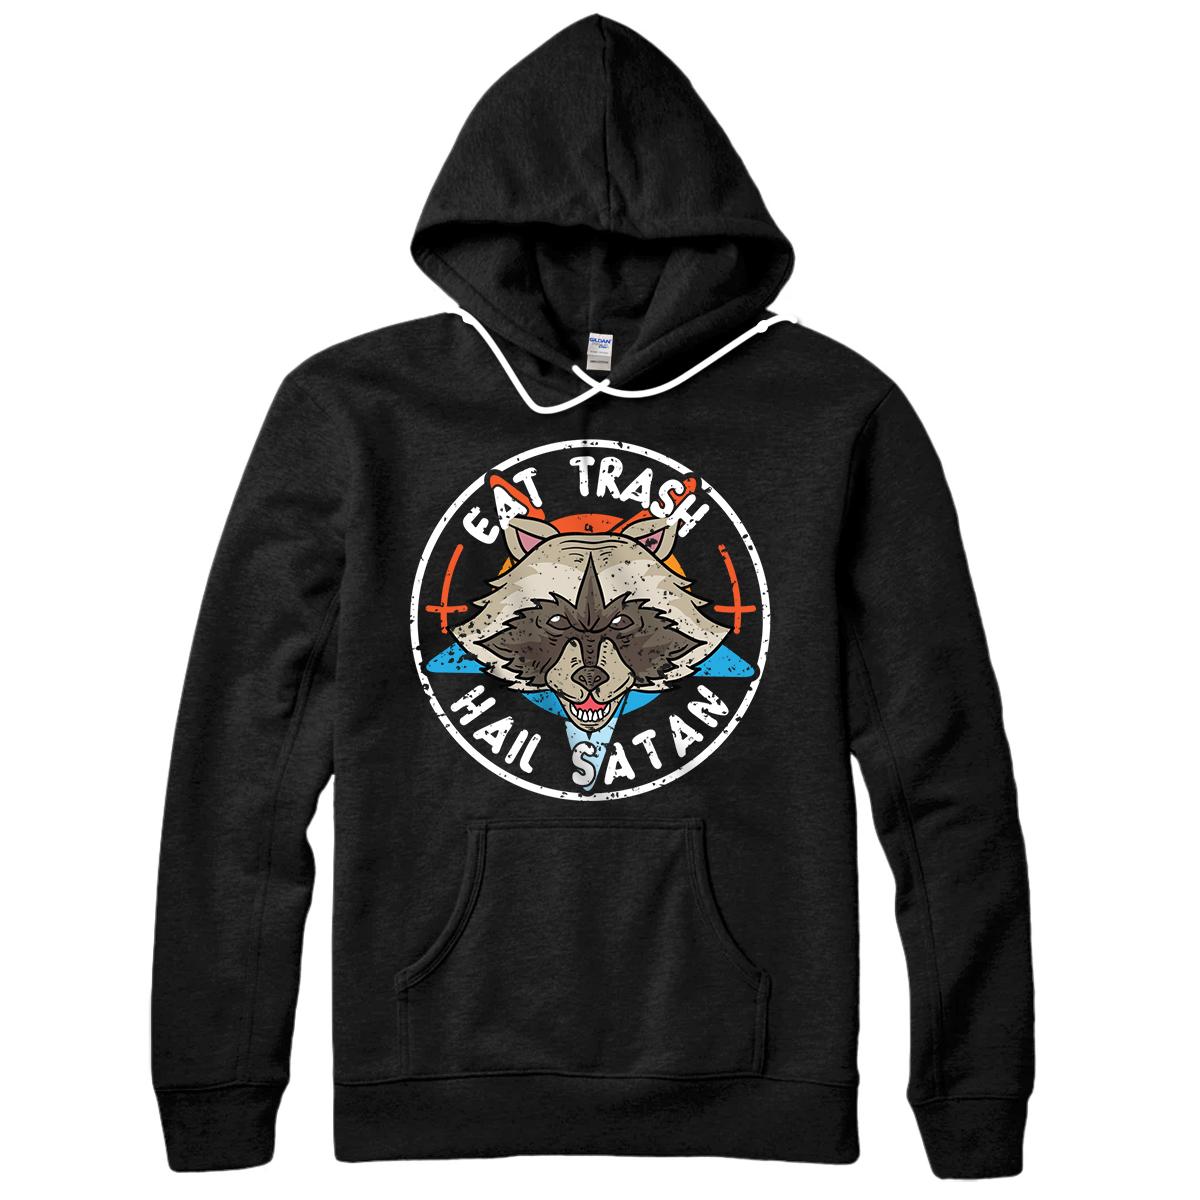 Personalized Eat Trash Hail Satan Raccoon Pentagram Satanic Garbage Gang Pullover Hoodie